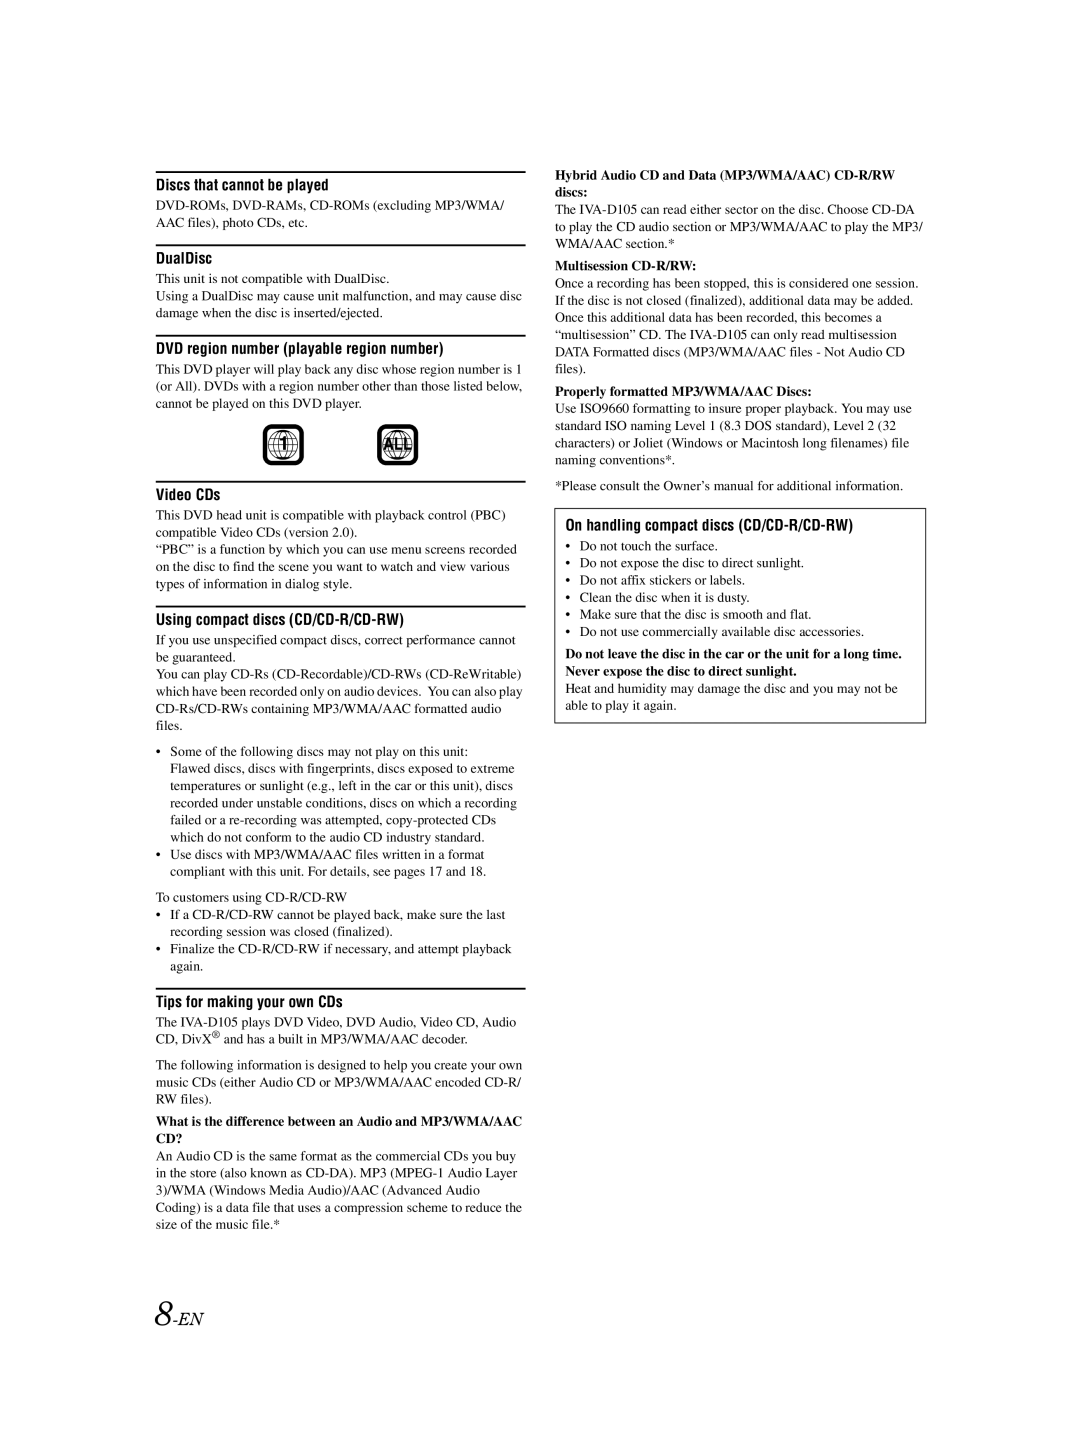 Alpine IVA-D105 owner manual All 